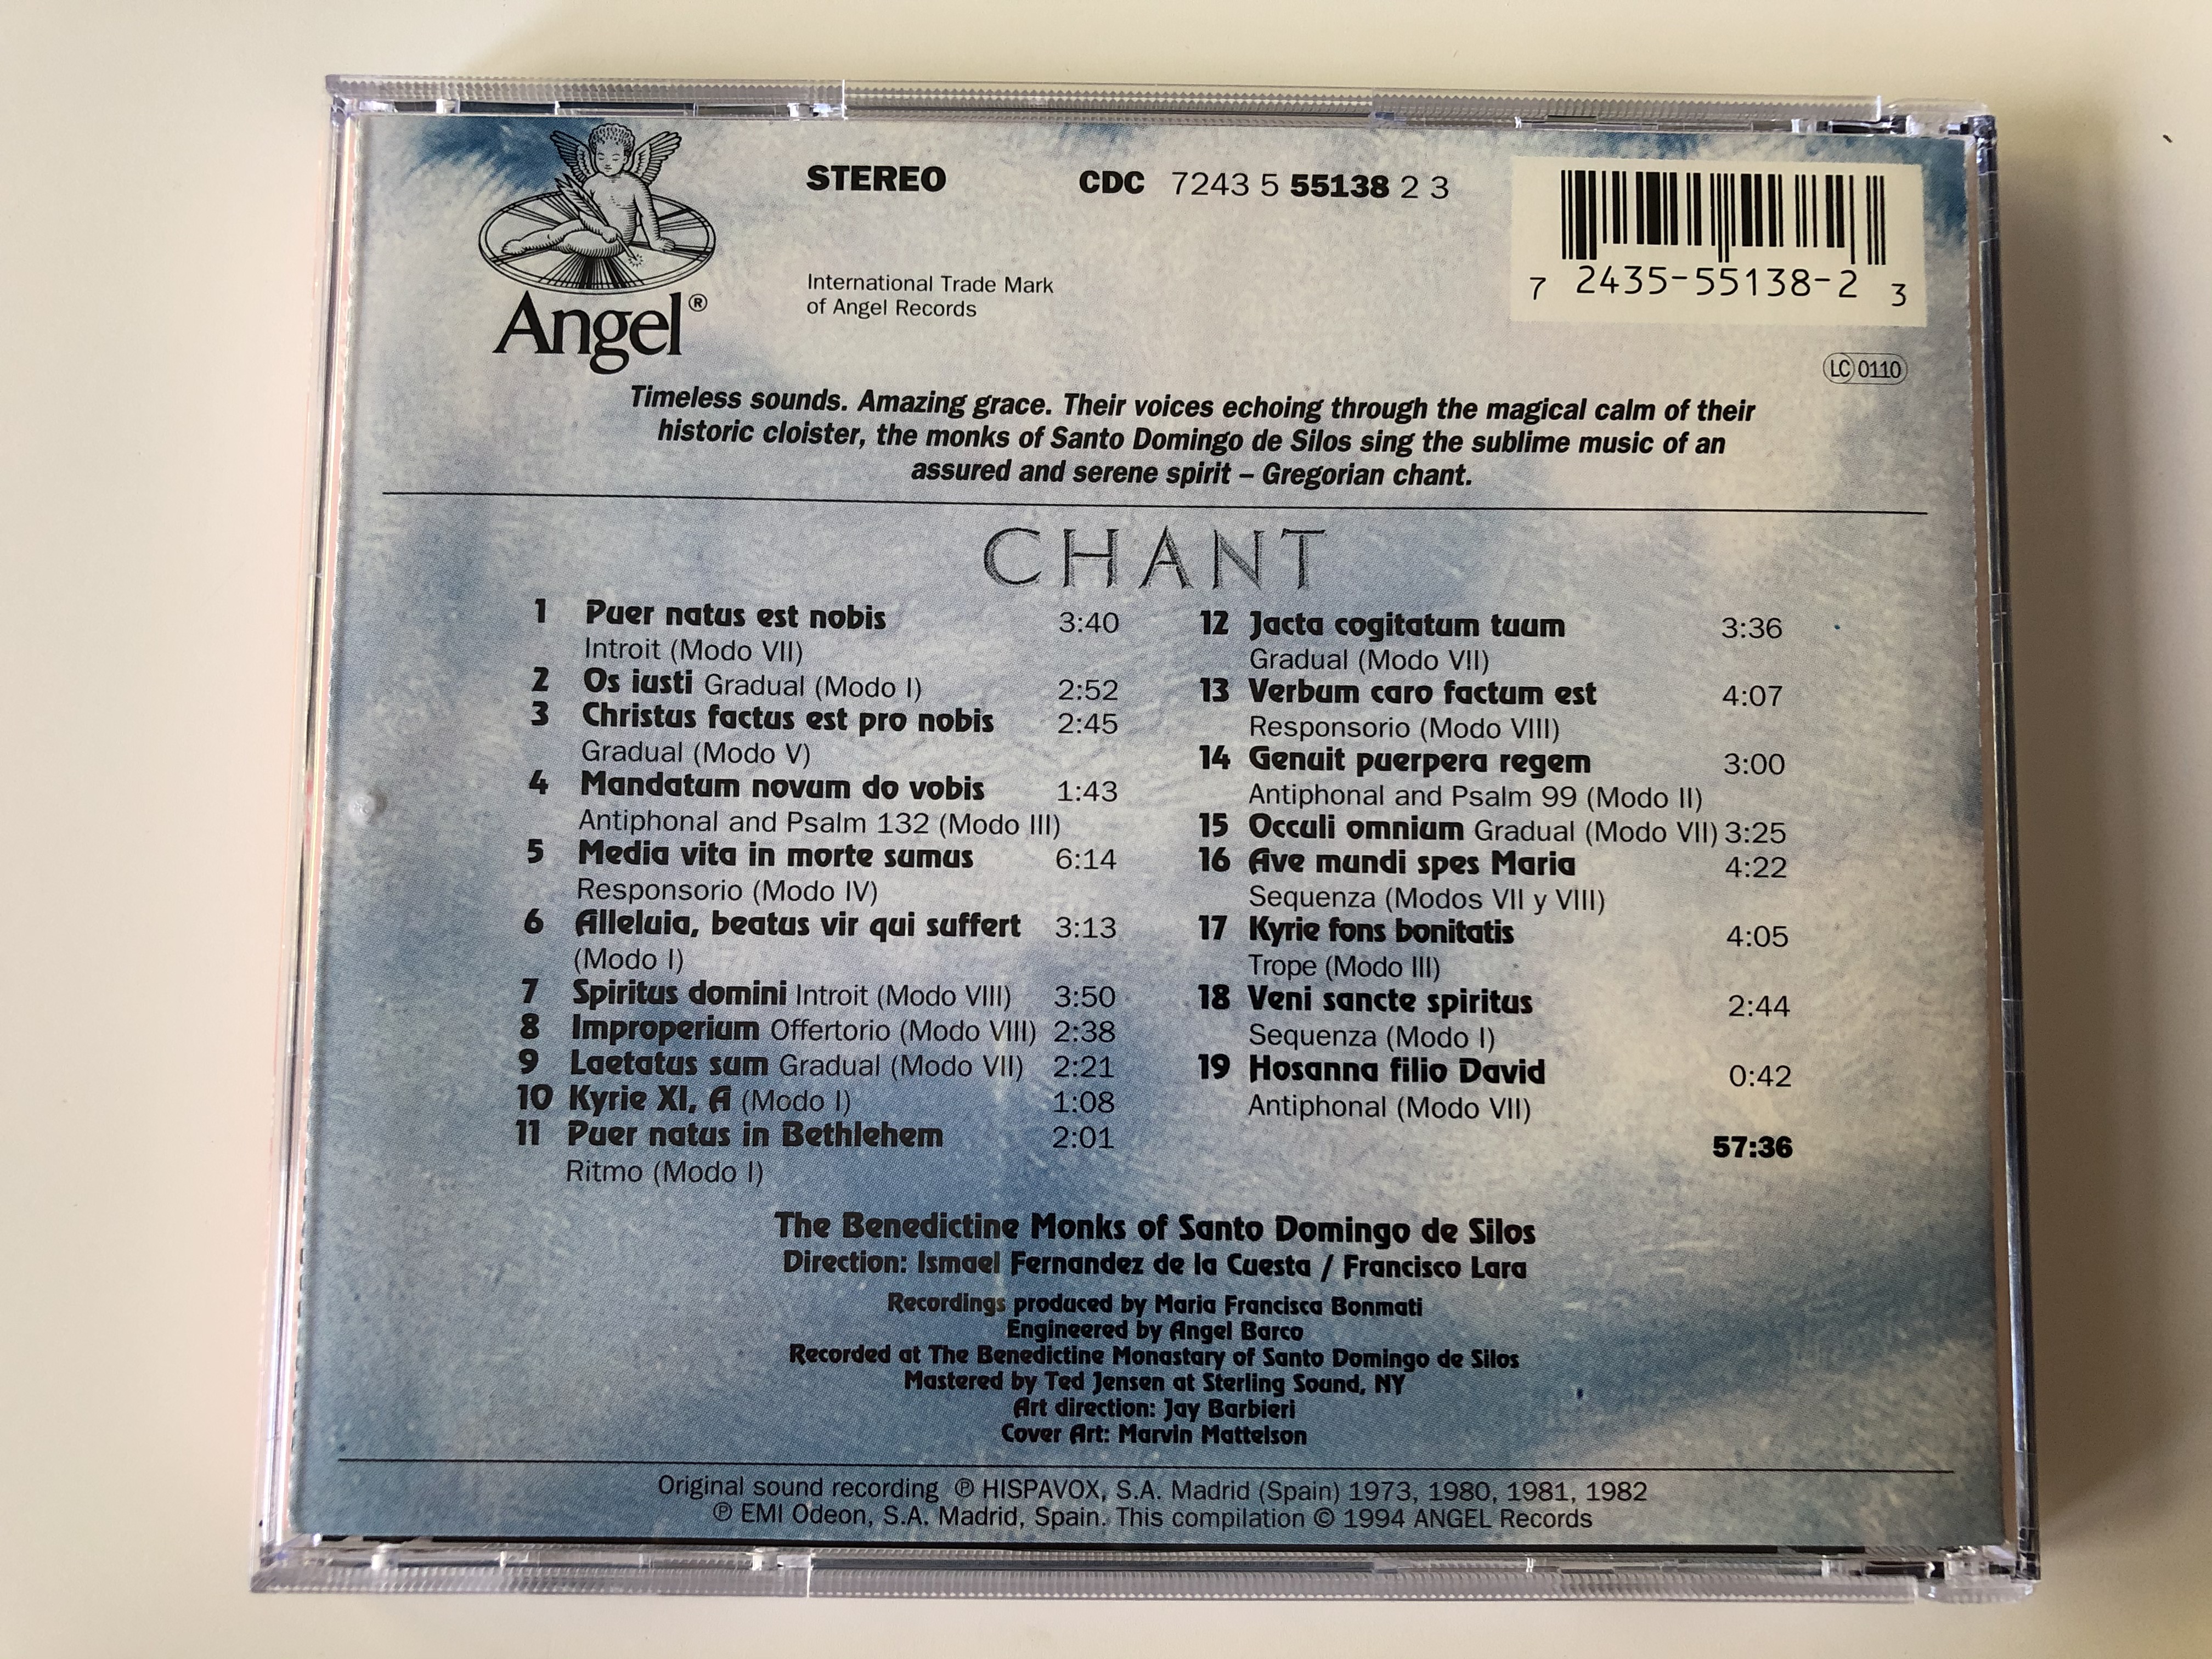 chant-the-benedictine-monks-of-santo-domingo-de-silos-angel-records-audio-cd-1993-stereo-cdc-7243-5-55138-2-3-5-.jpg